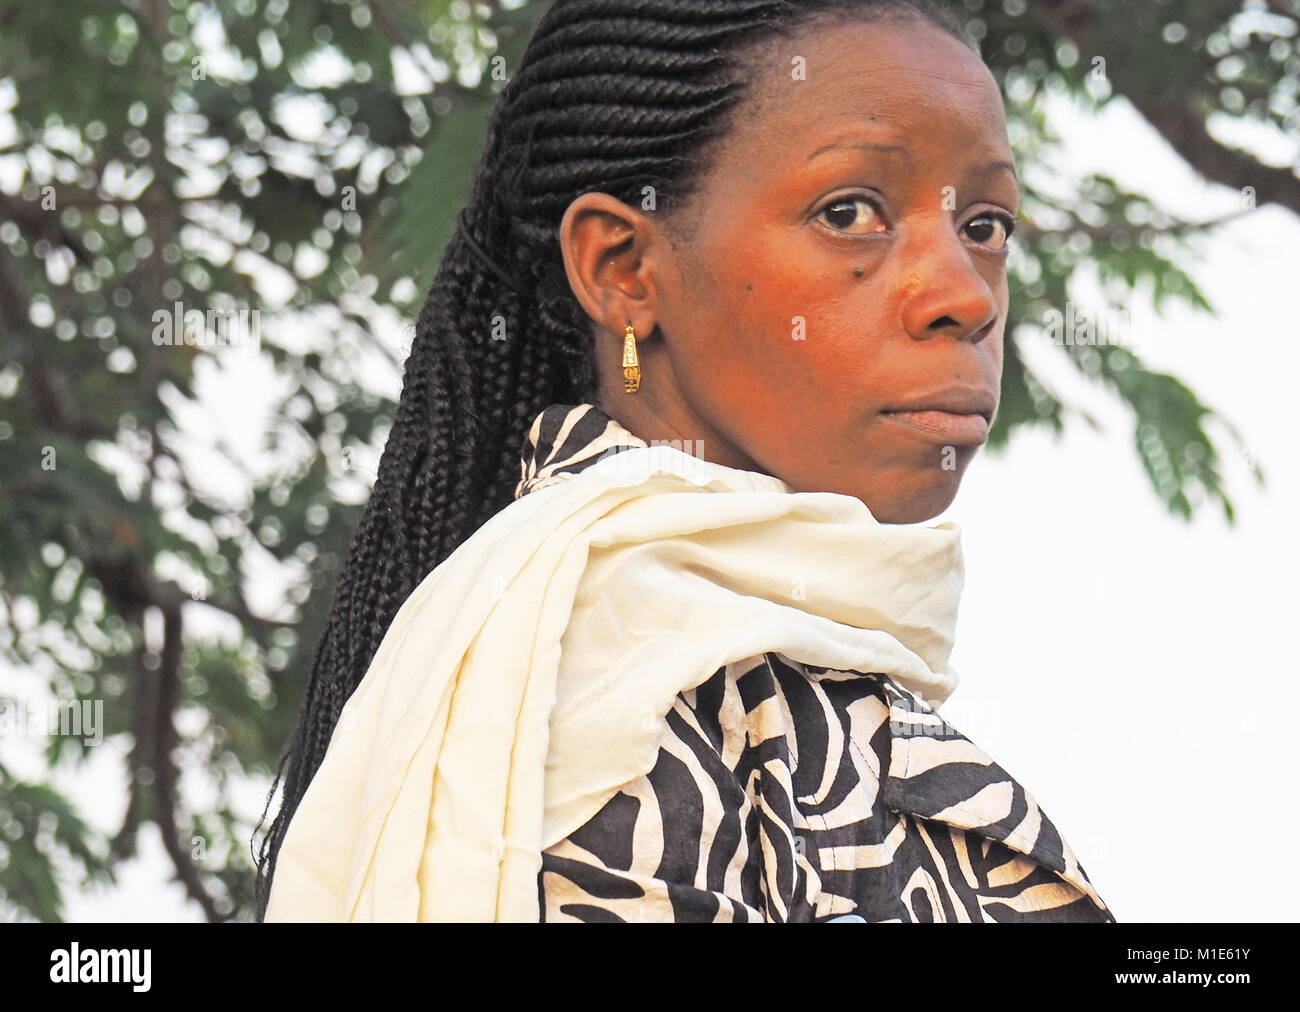 Old Woman in Uganda, Africa – Stock Editorial Photo © imagex #11638713